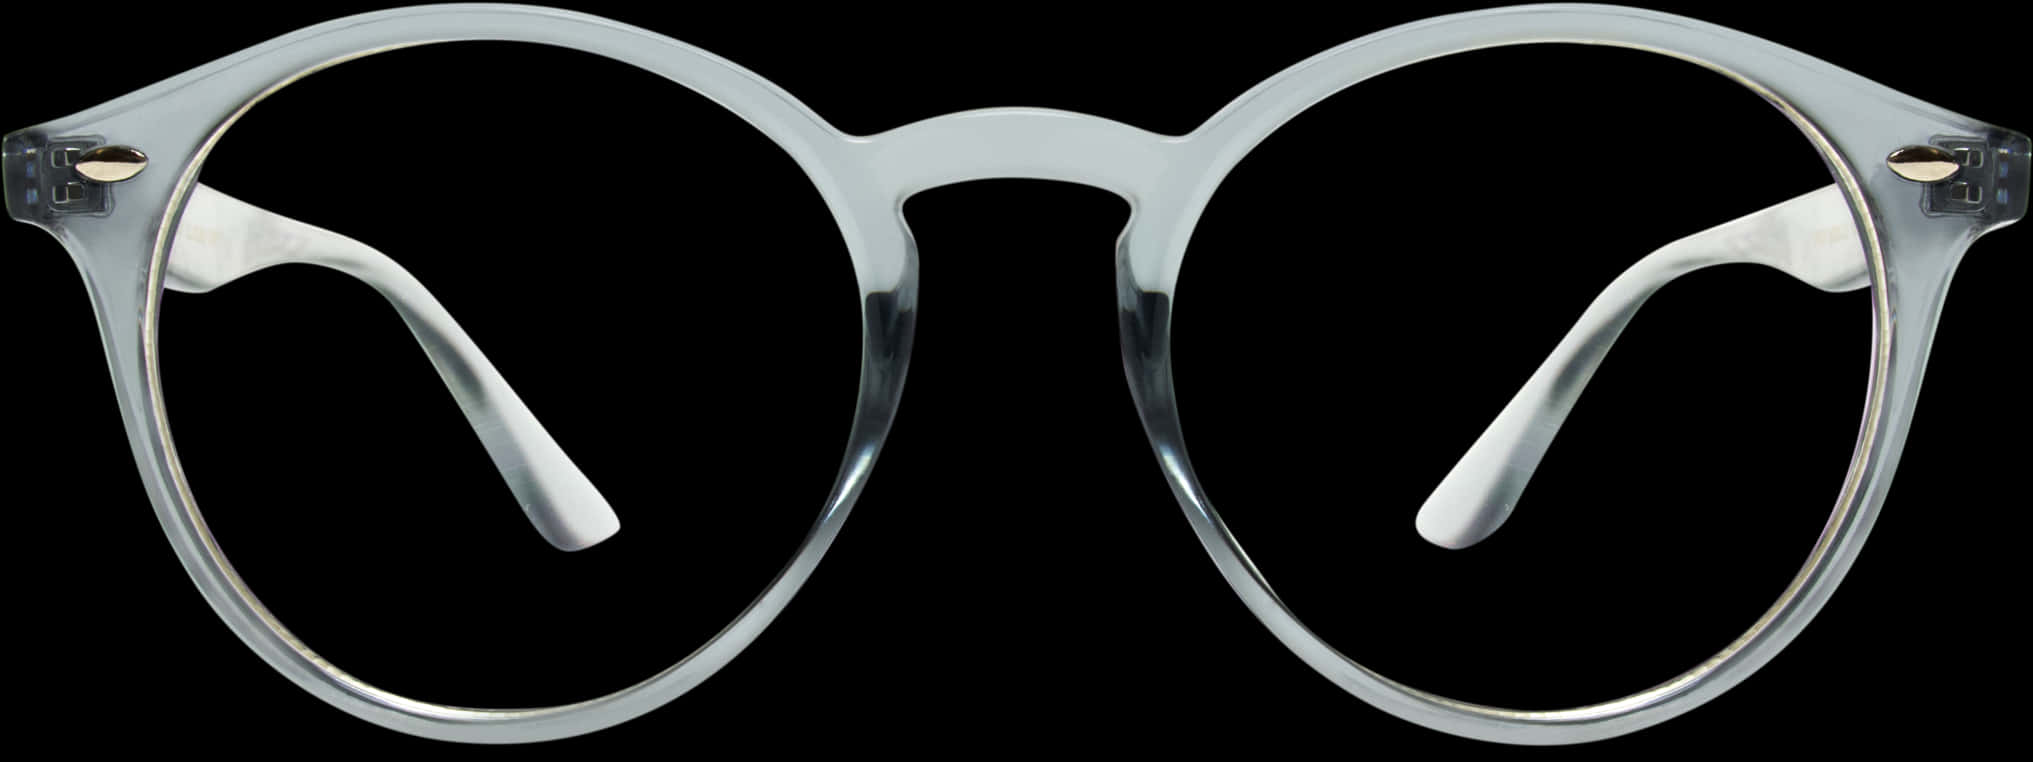 Round Frame Glasses Isolatedon Black